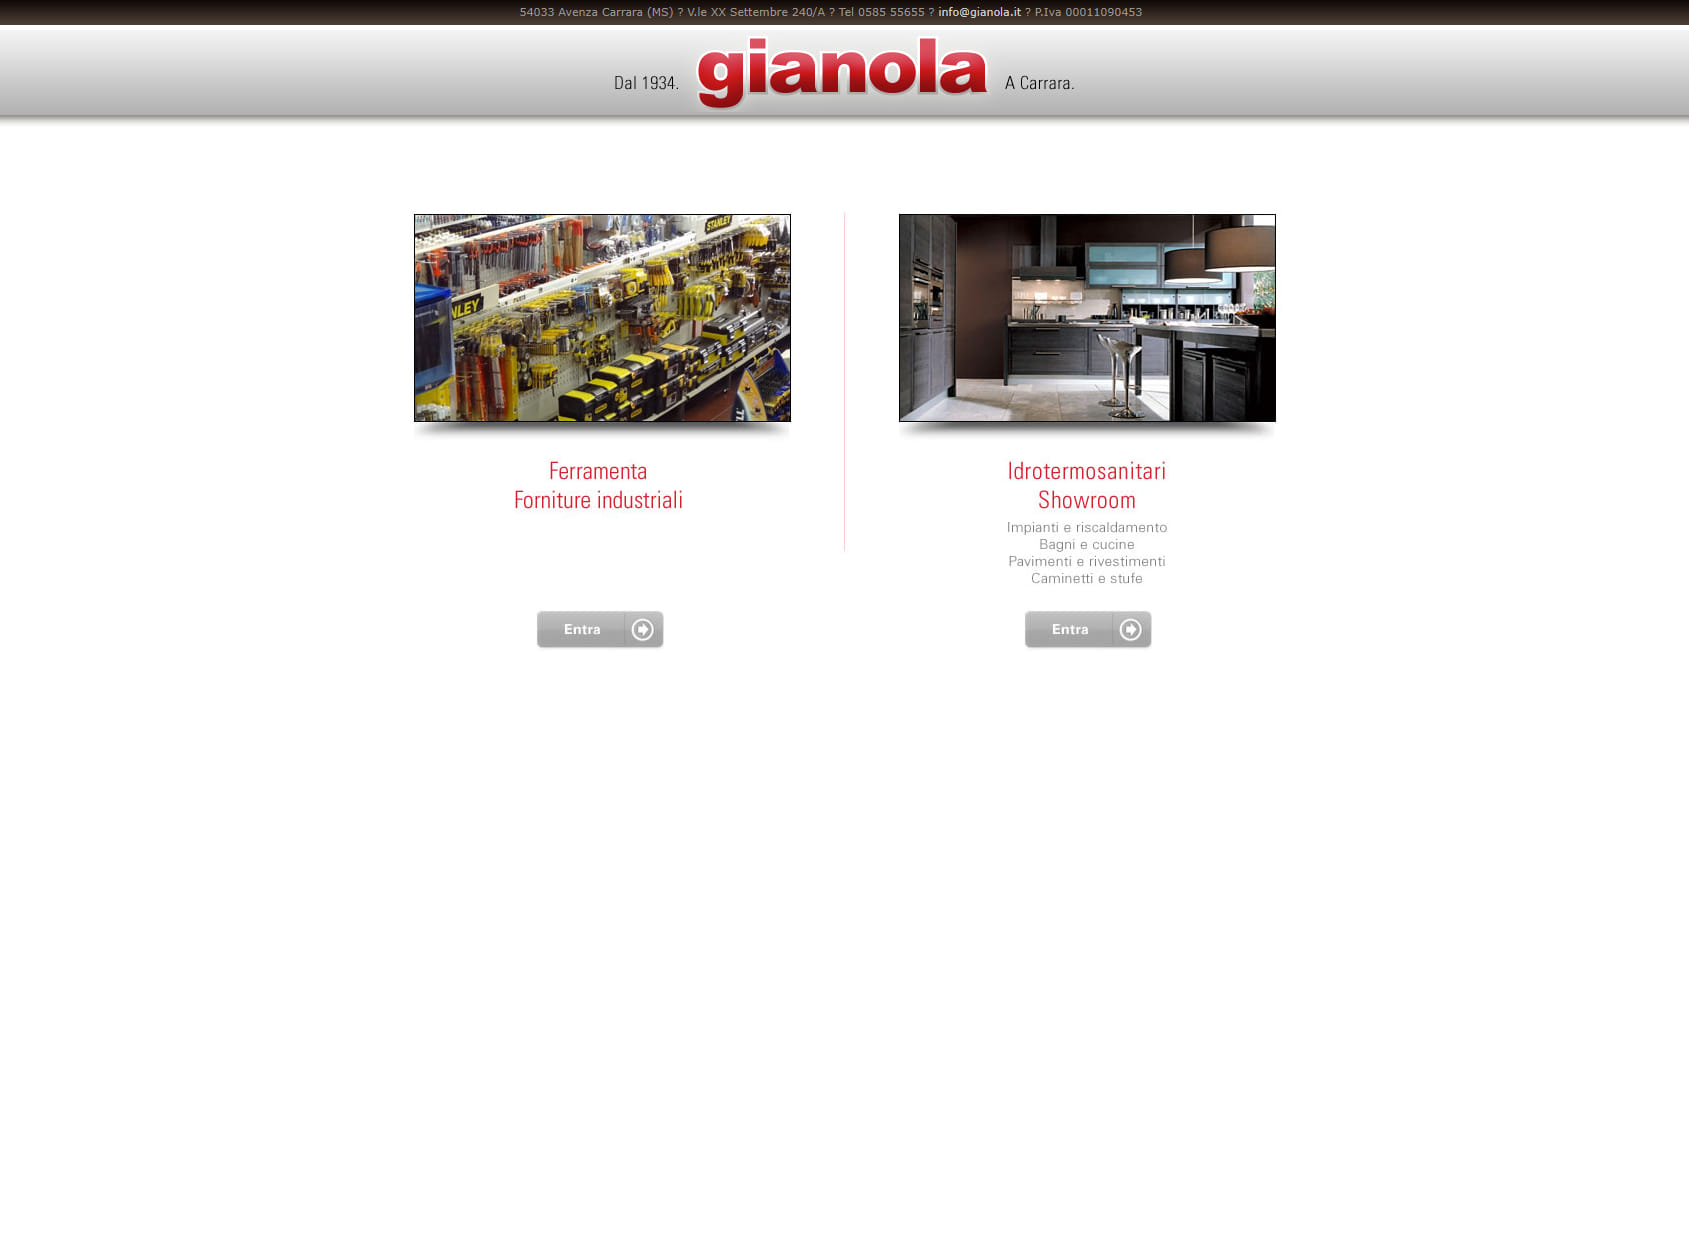 Gianola